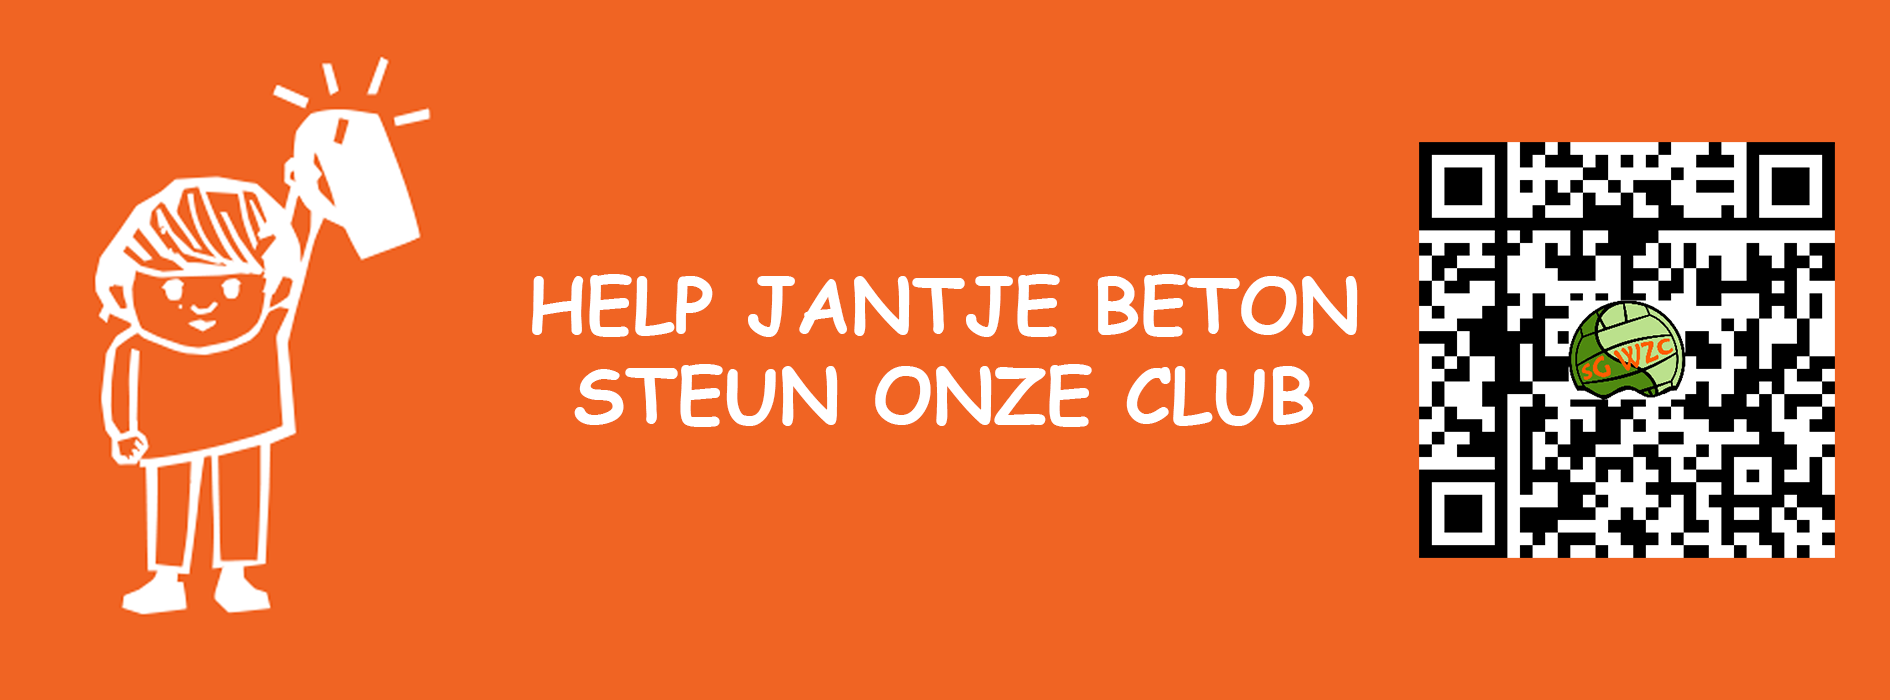 Jantje Beton WEB Facebook